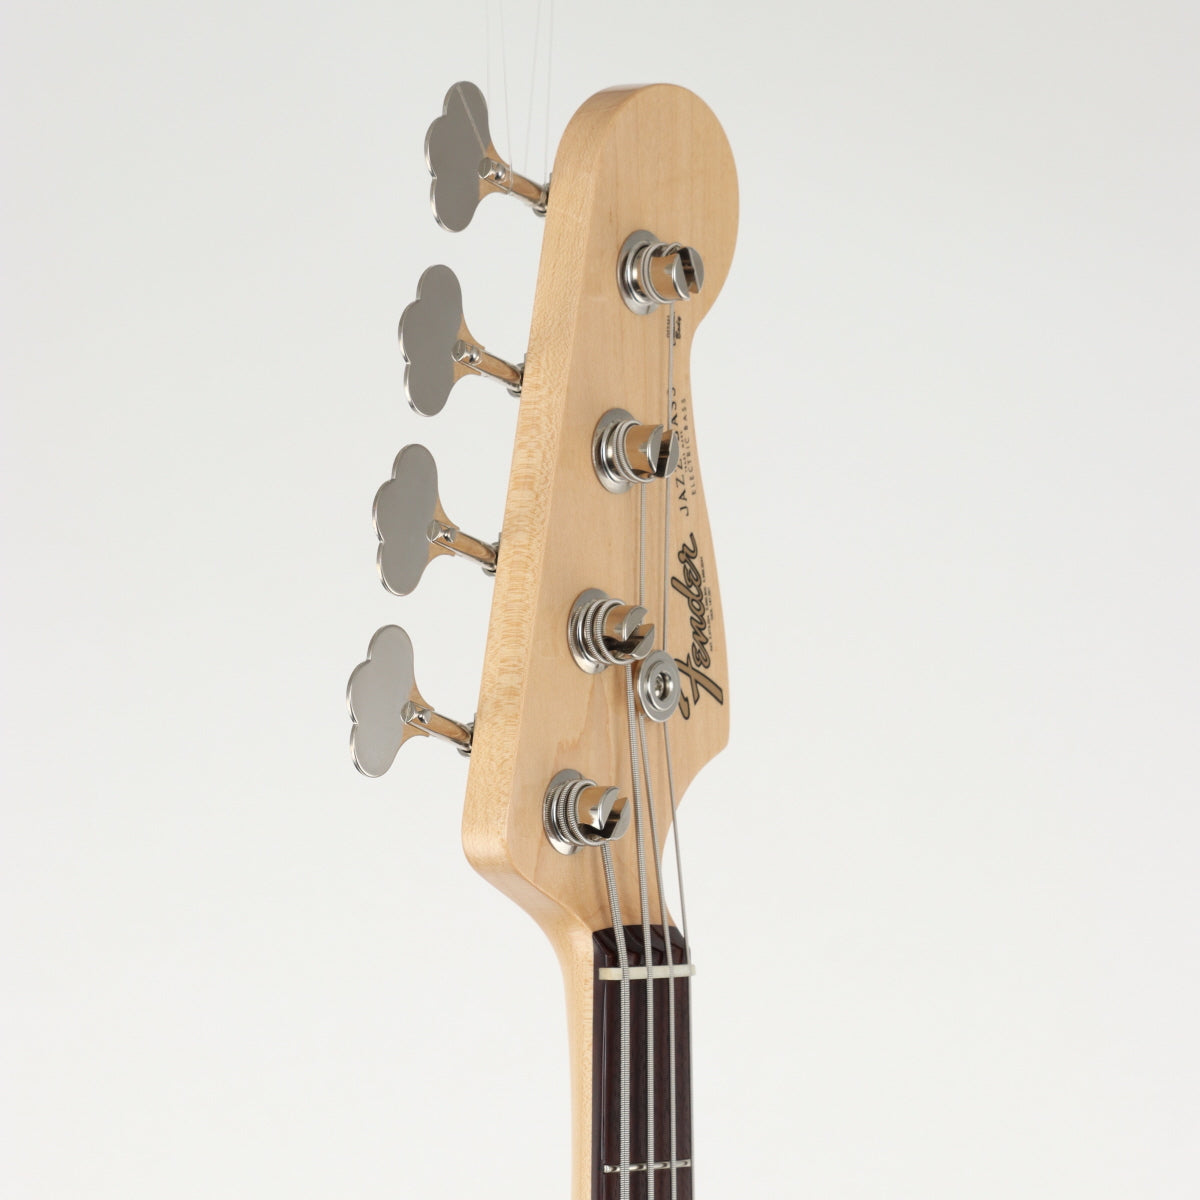 [SN M.I.J JD20015628] USED Fender / Heritage 60s Jazz Bass 3 Color Sunburst [11]